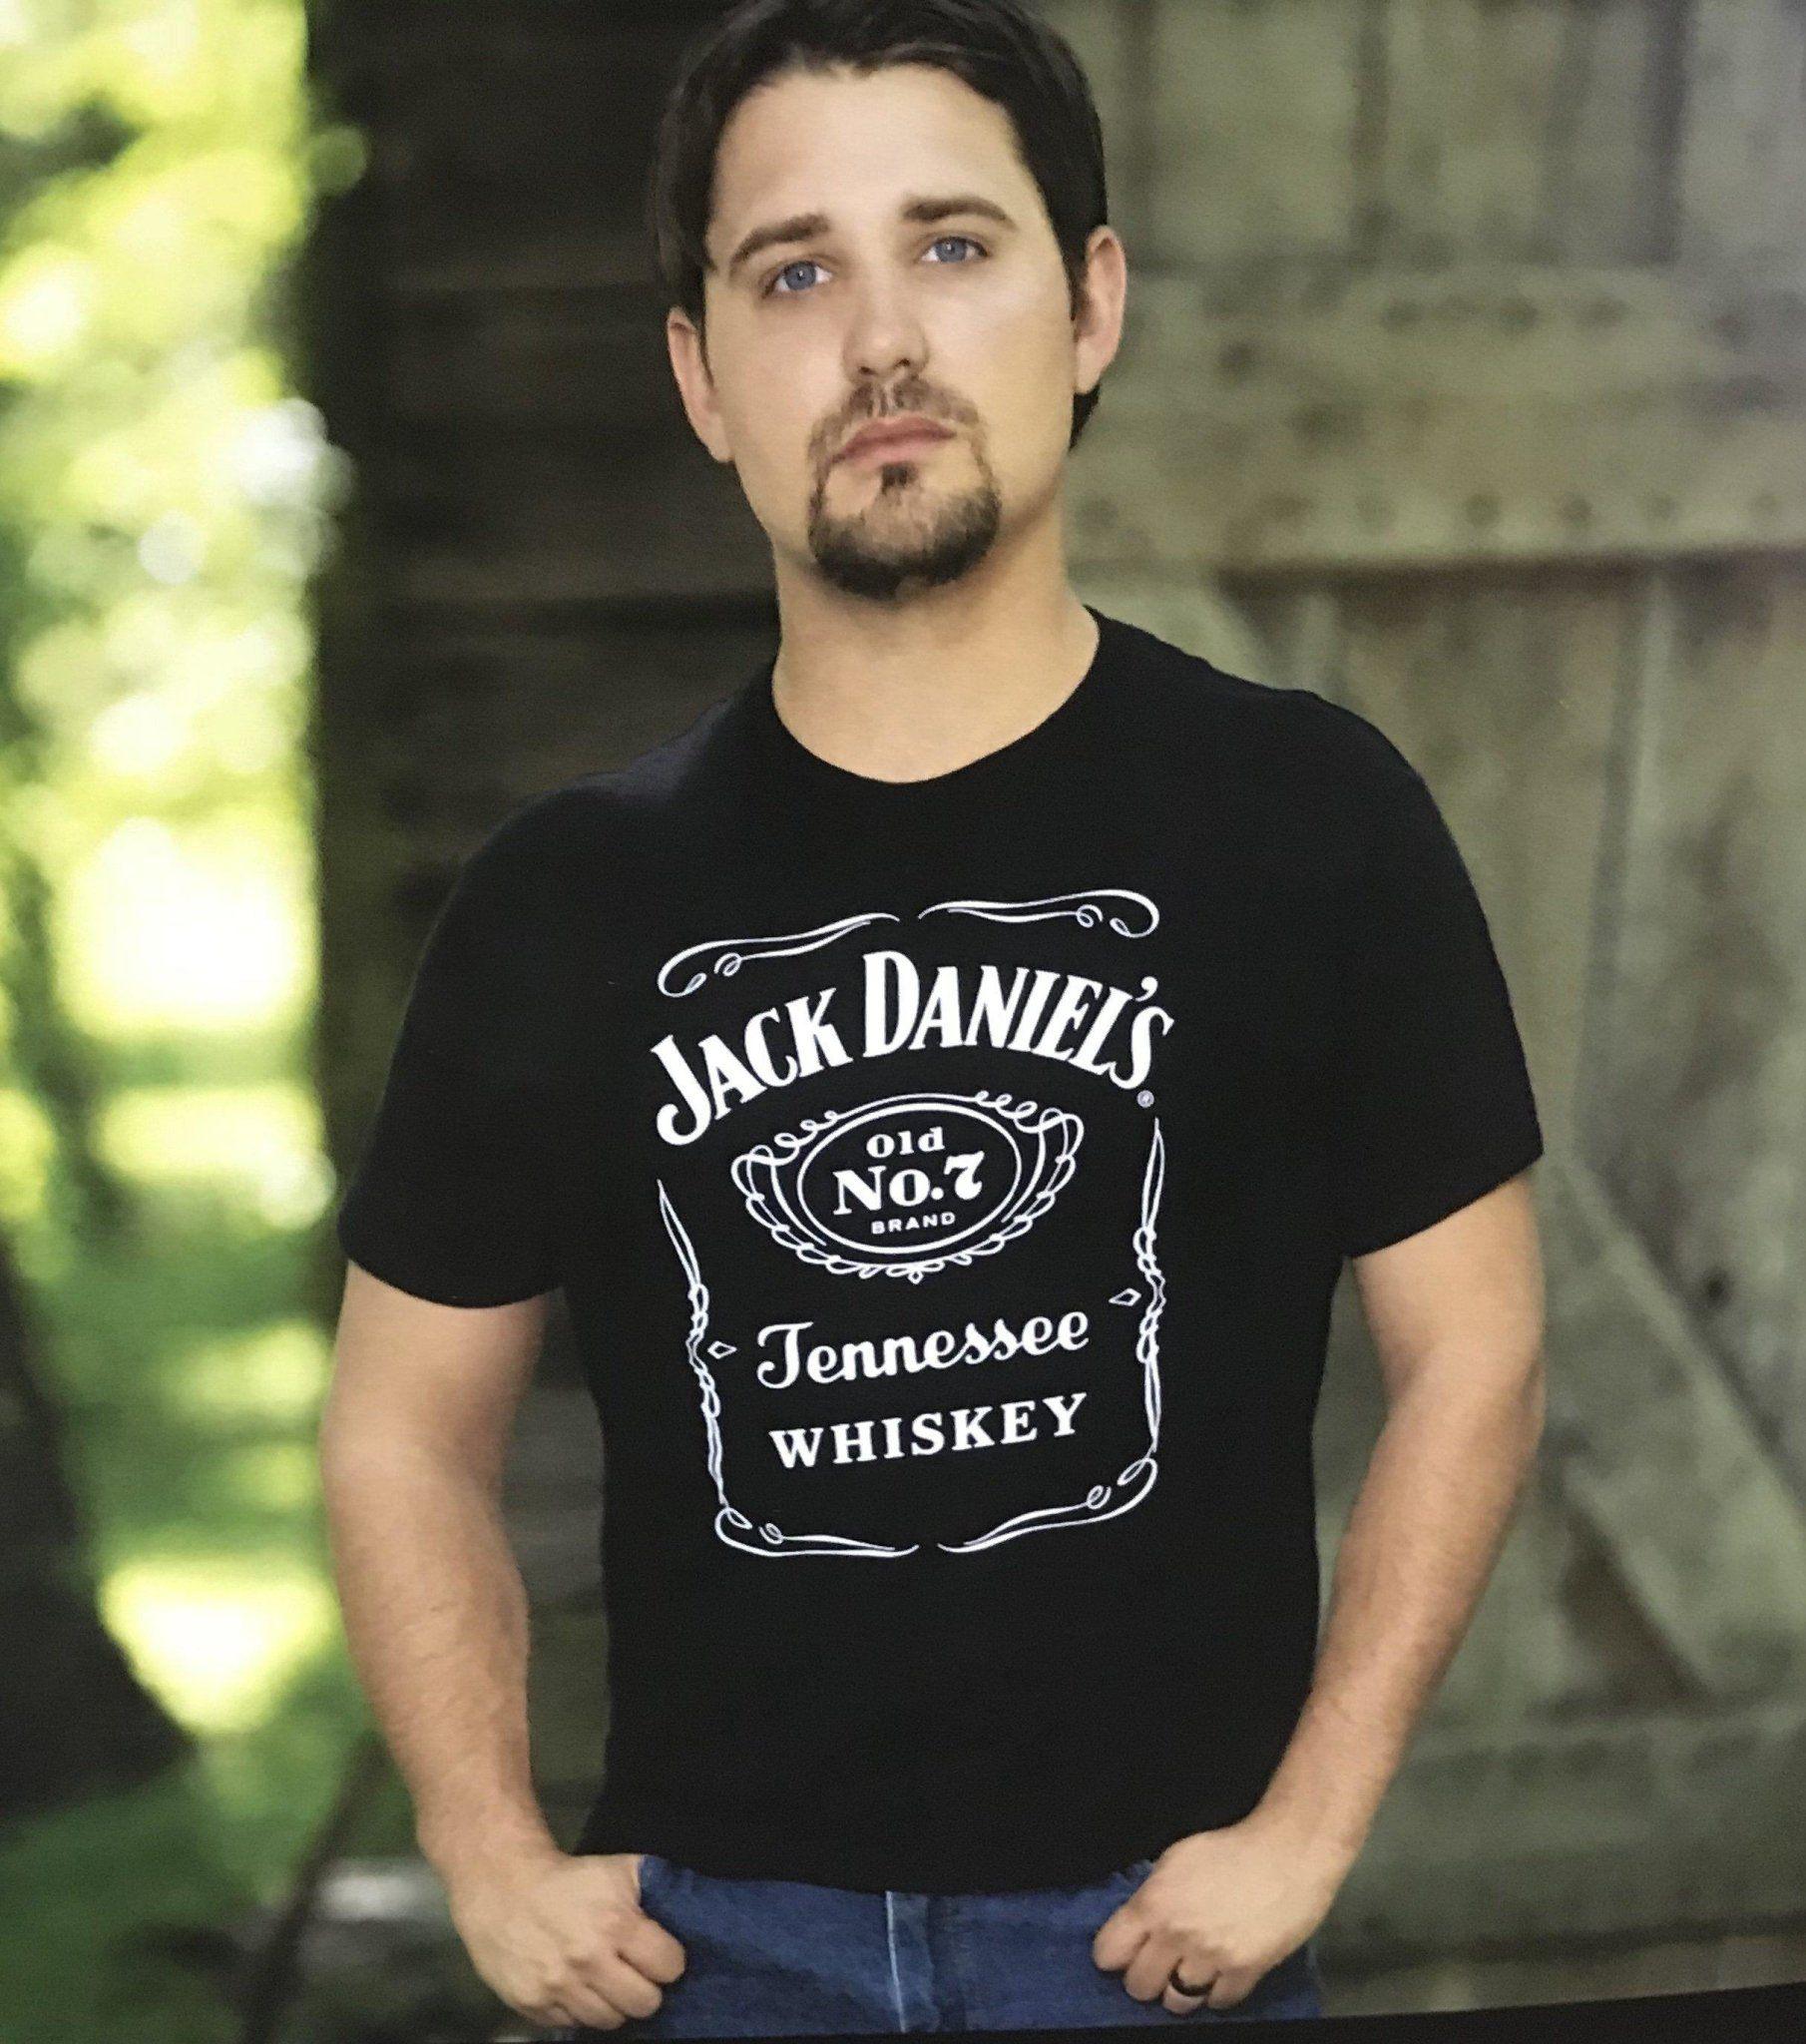 Jack Daniel’s T-Shirt Classic Black Label - The Whiskey Cave